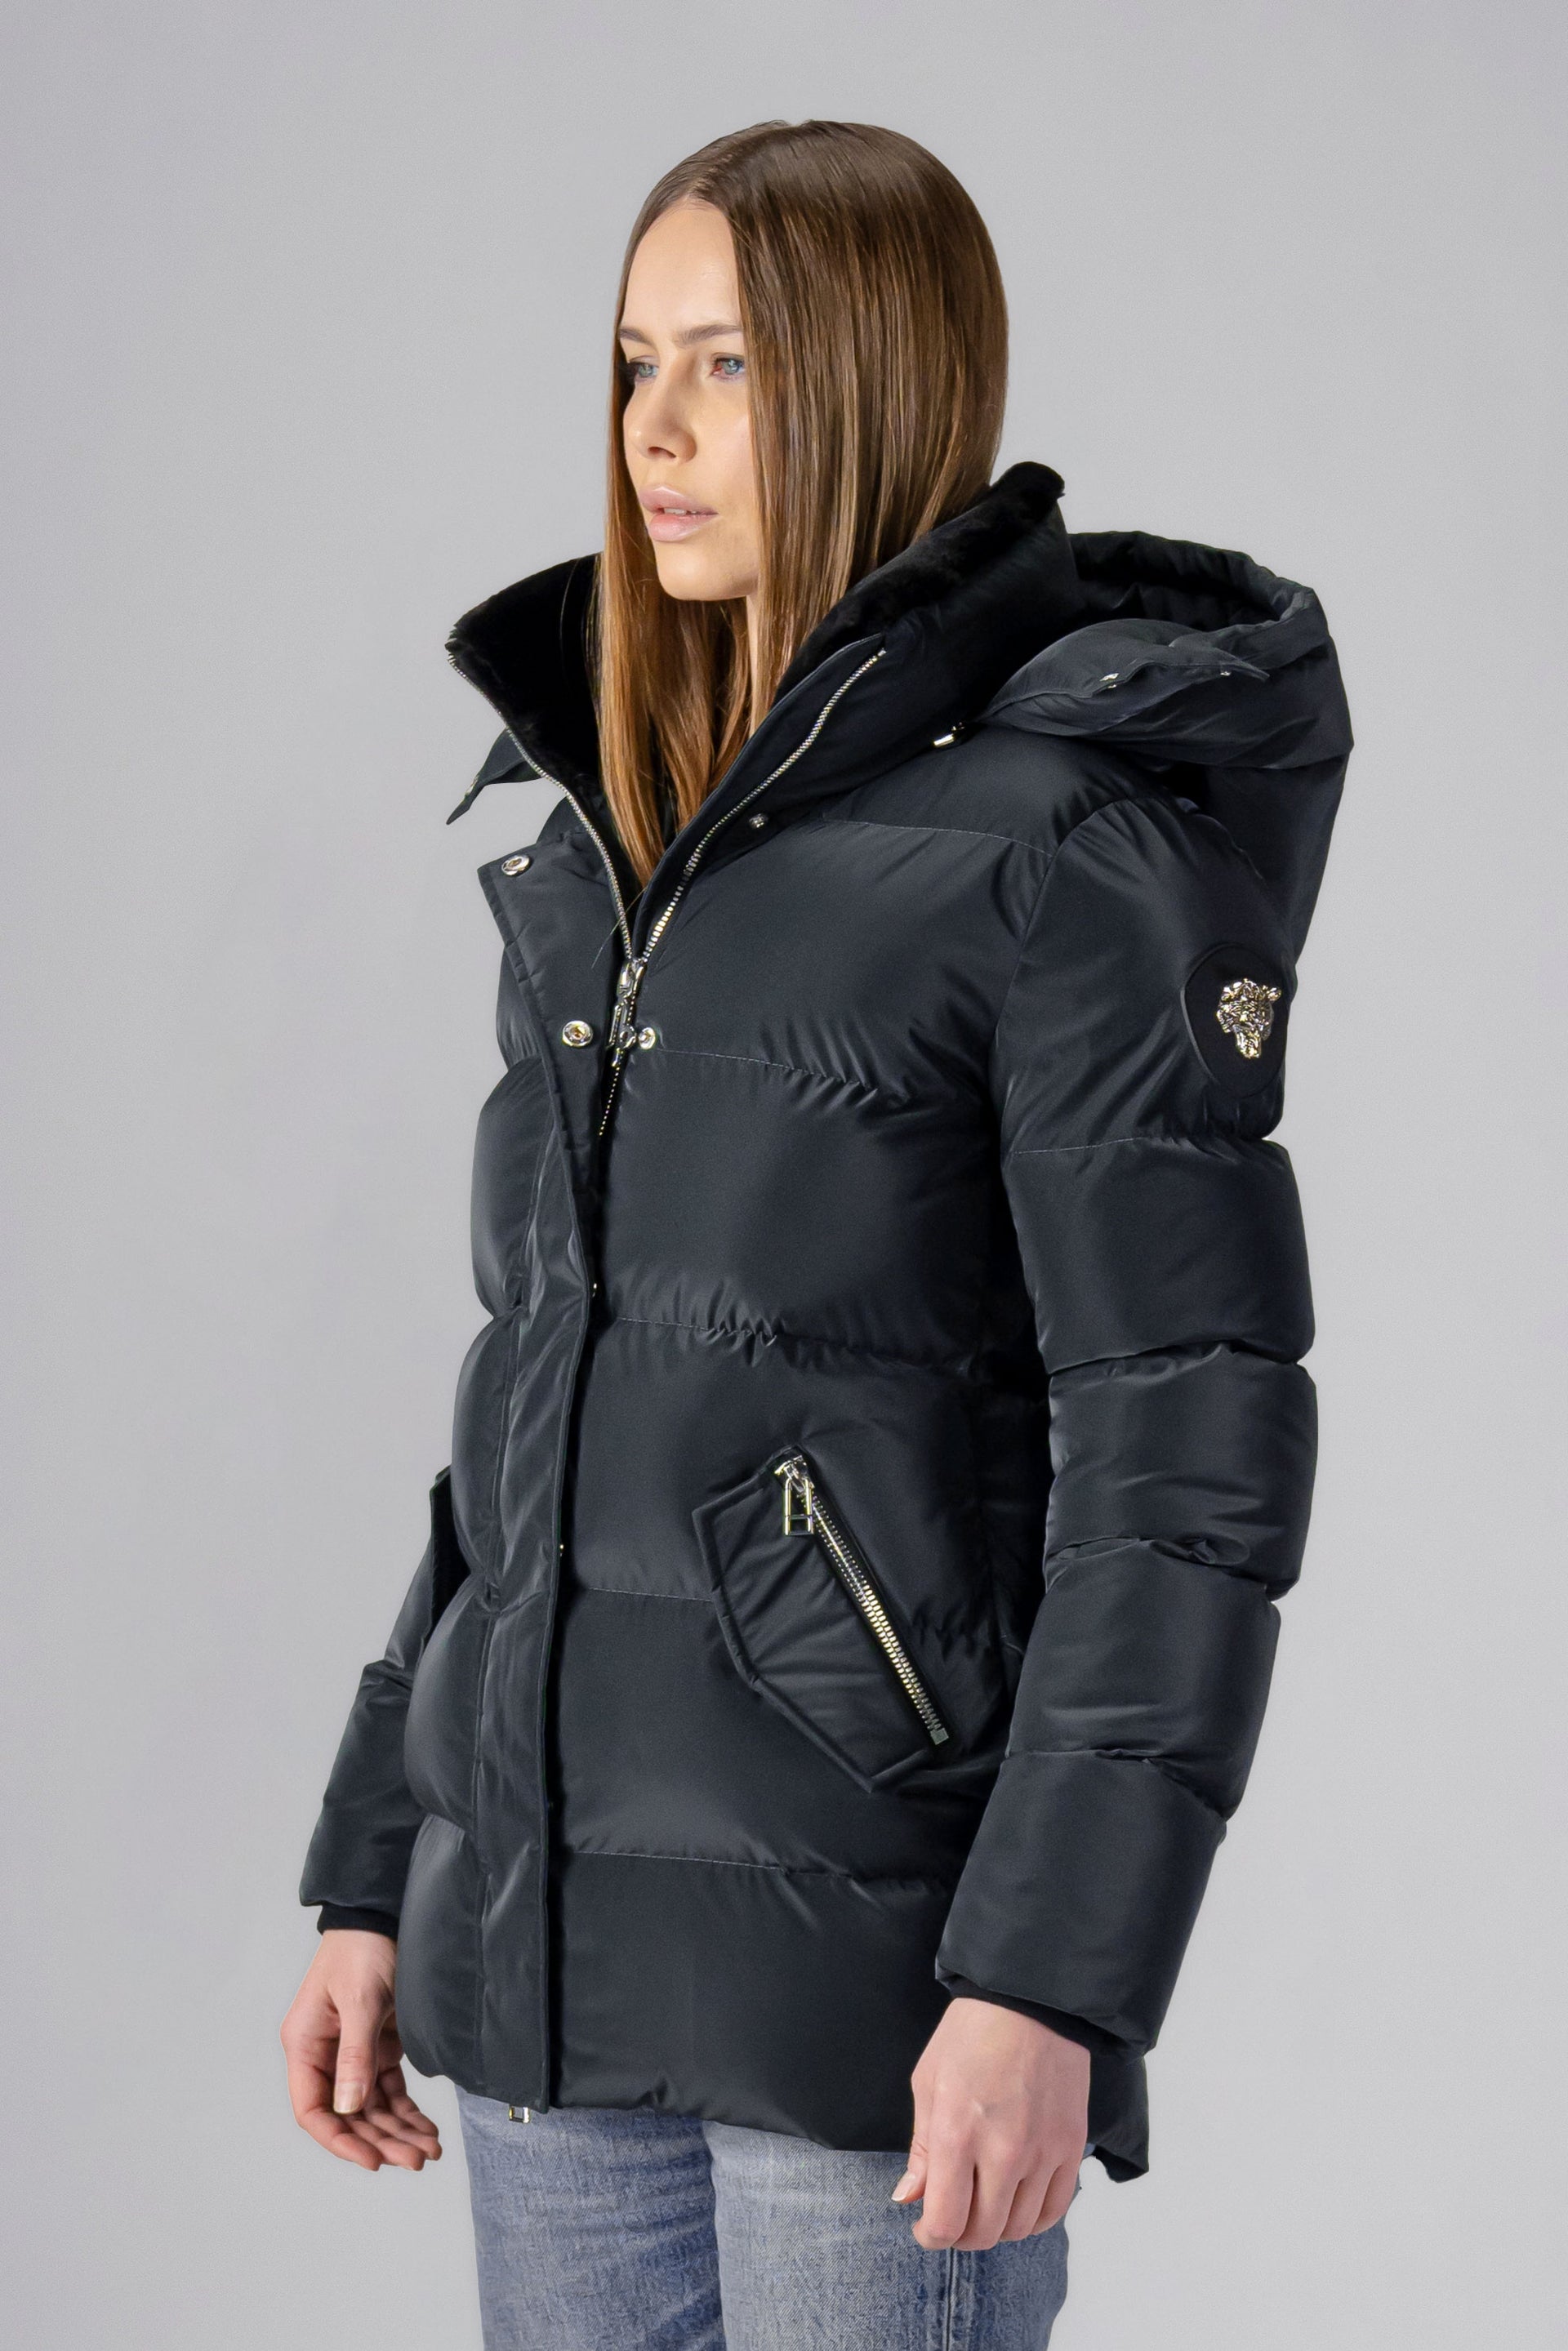 Woodpecker Women's Bumnester Winter coat. High-end Canadian designer winter coat for women in shiny 